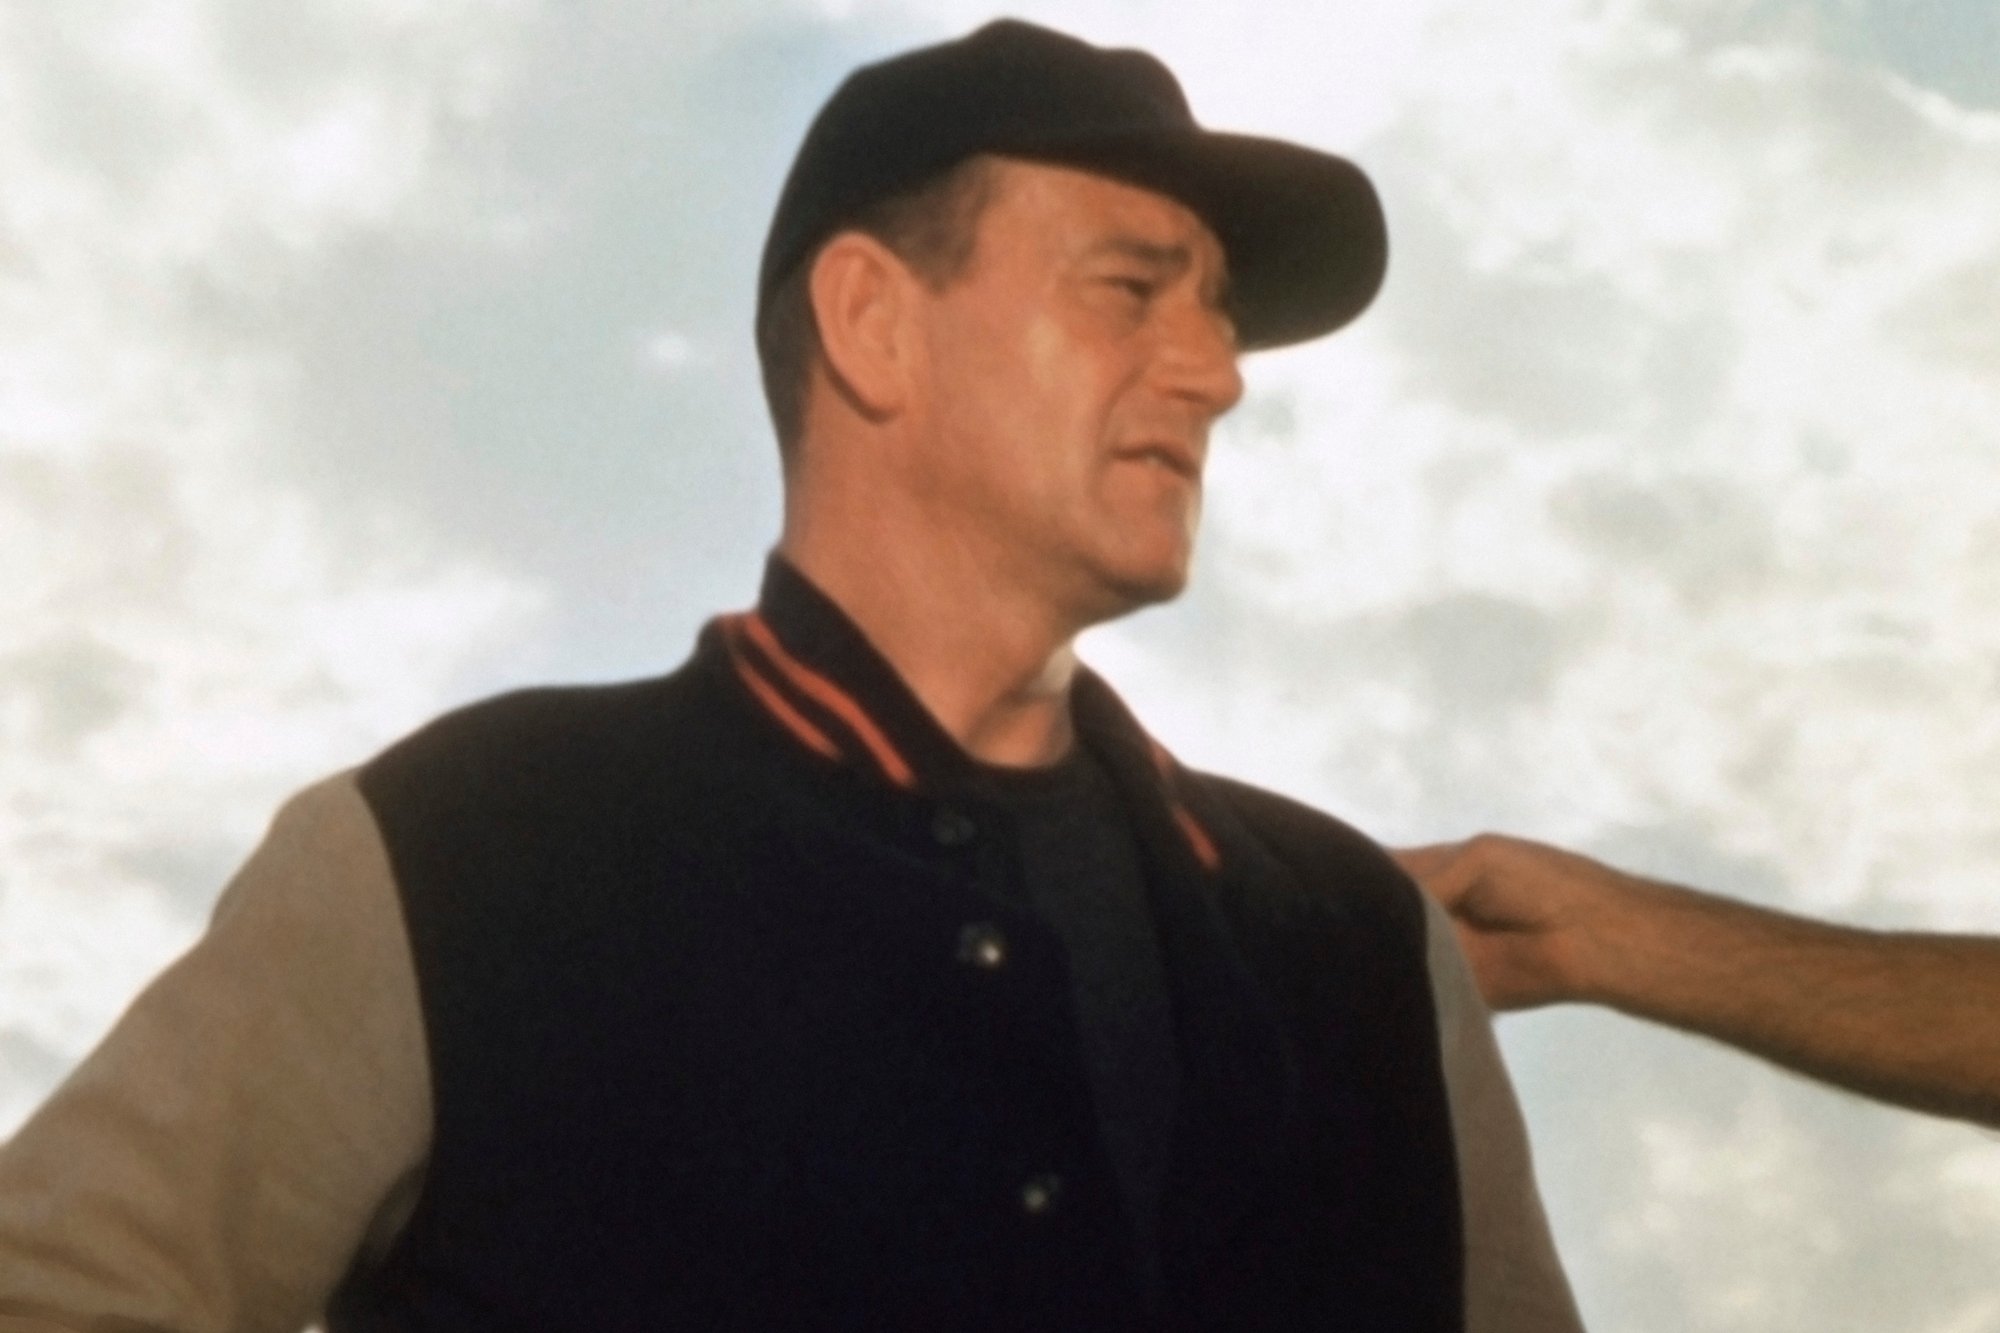 College football player John Wayne wearing a football coach uniform looking off-camera